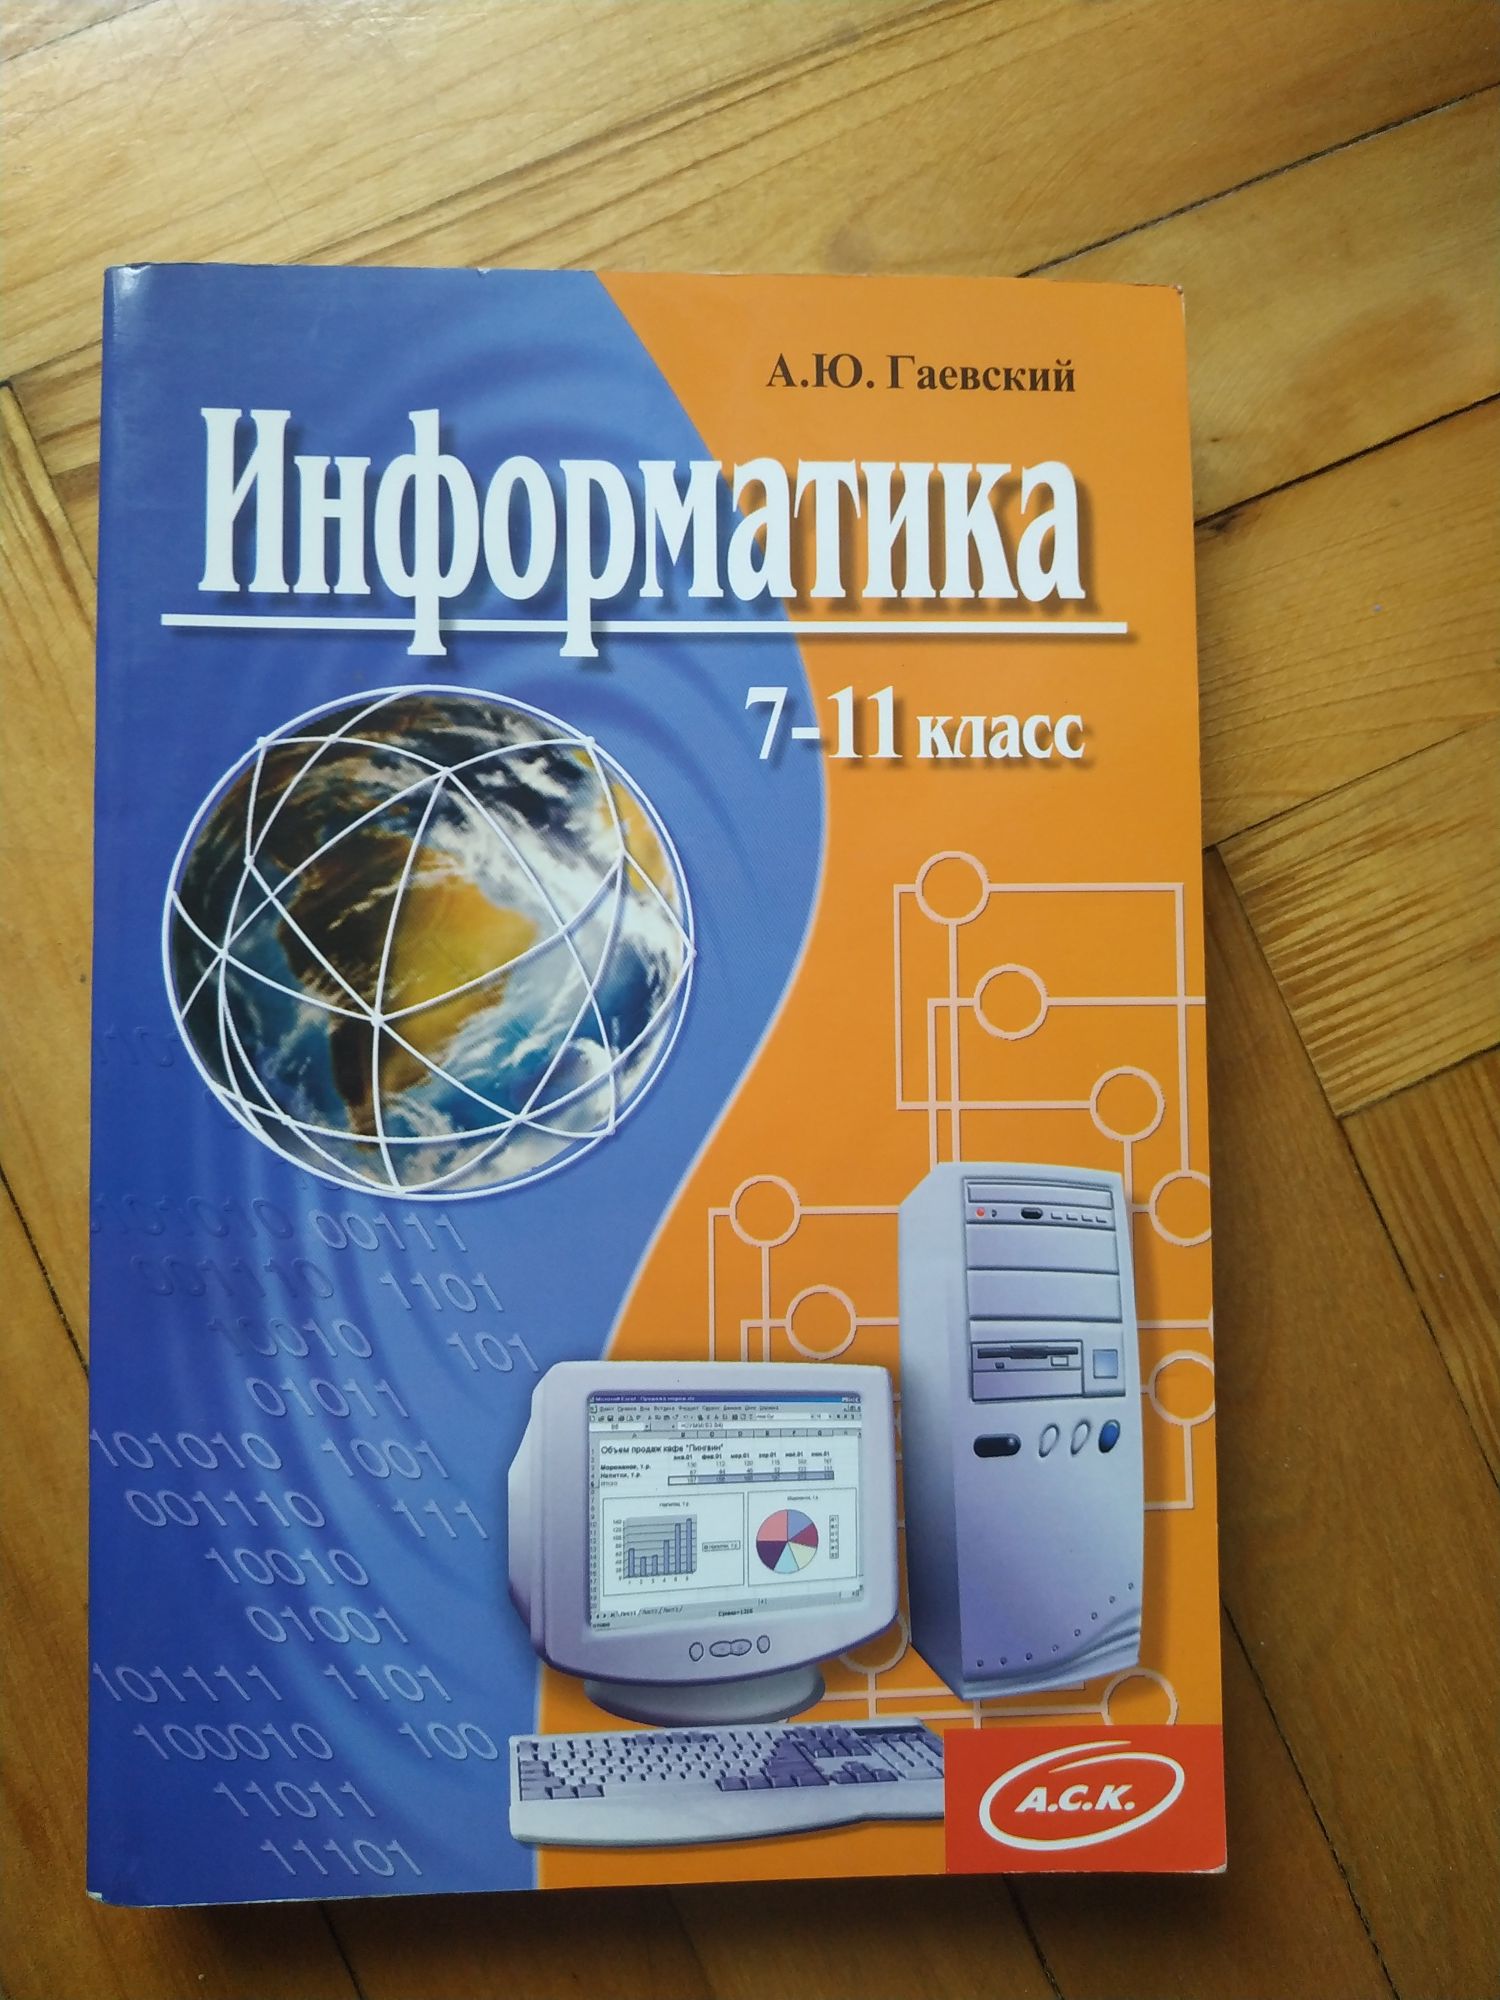 Книга "Информатика 7-11 класс"